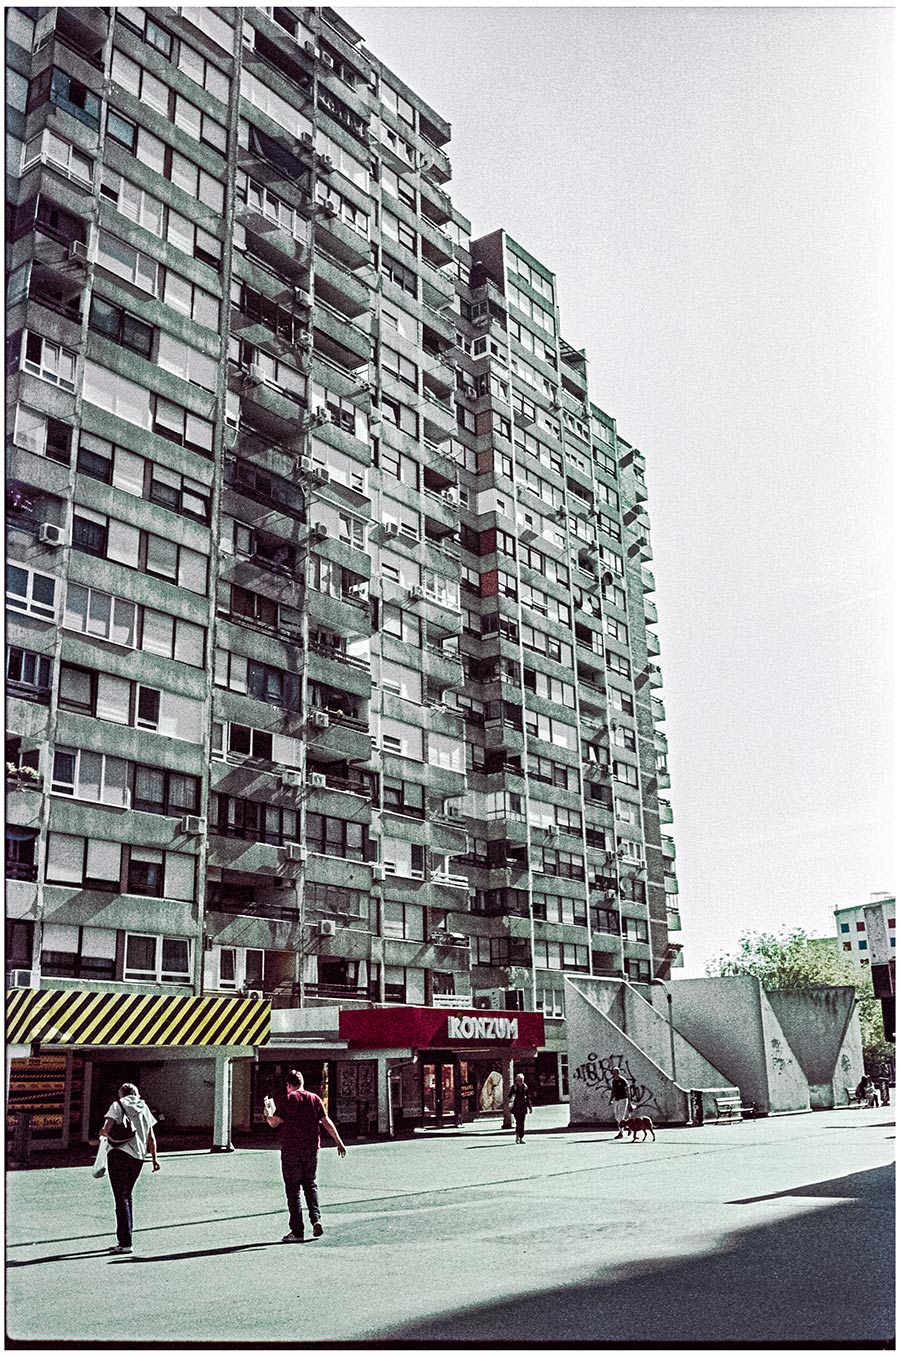 zagreb-brutalismus-mamutica13-analogefotografie-antjekroeger